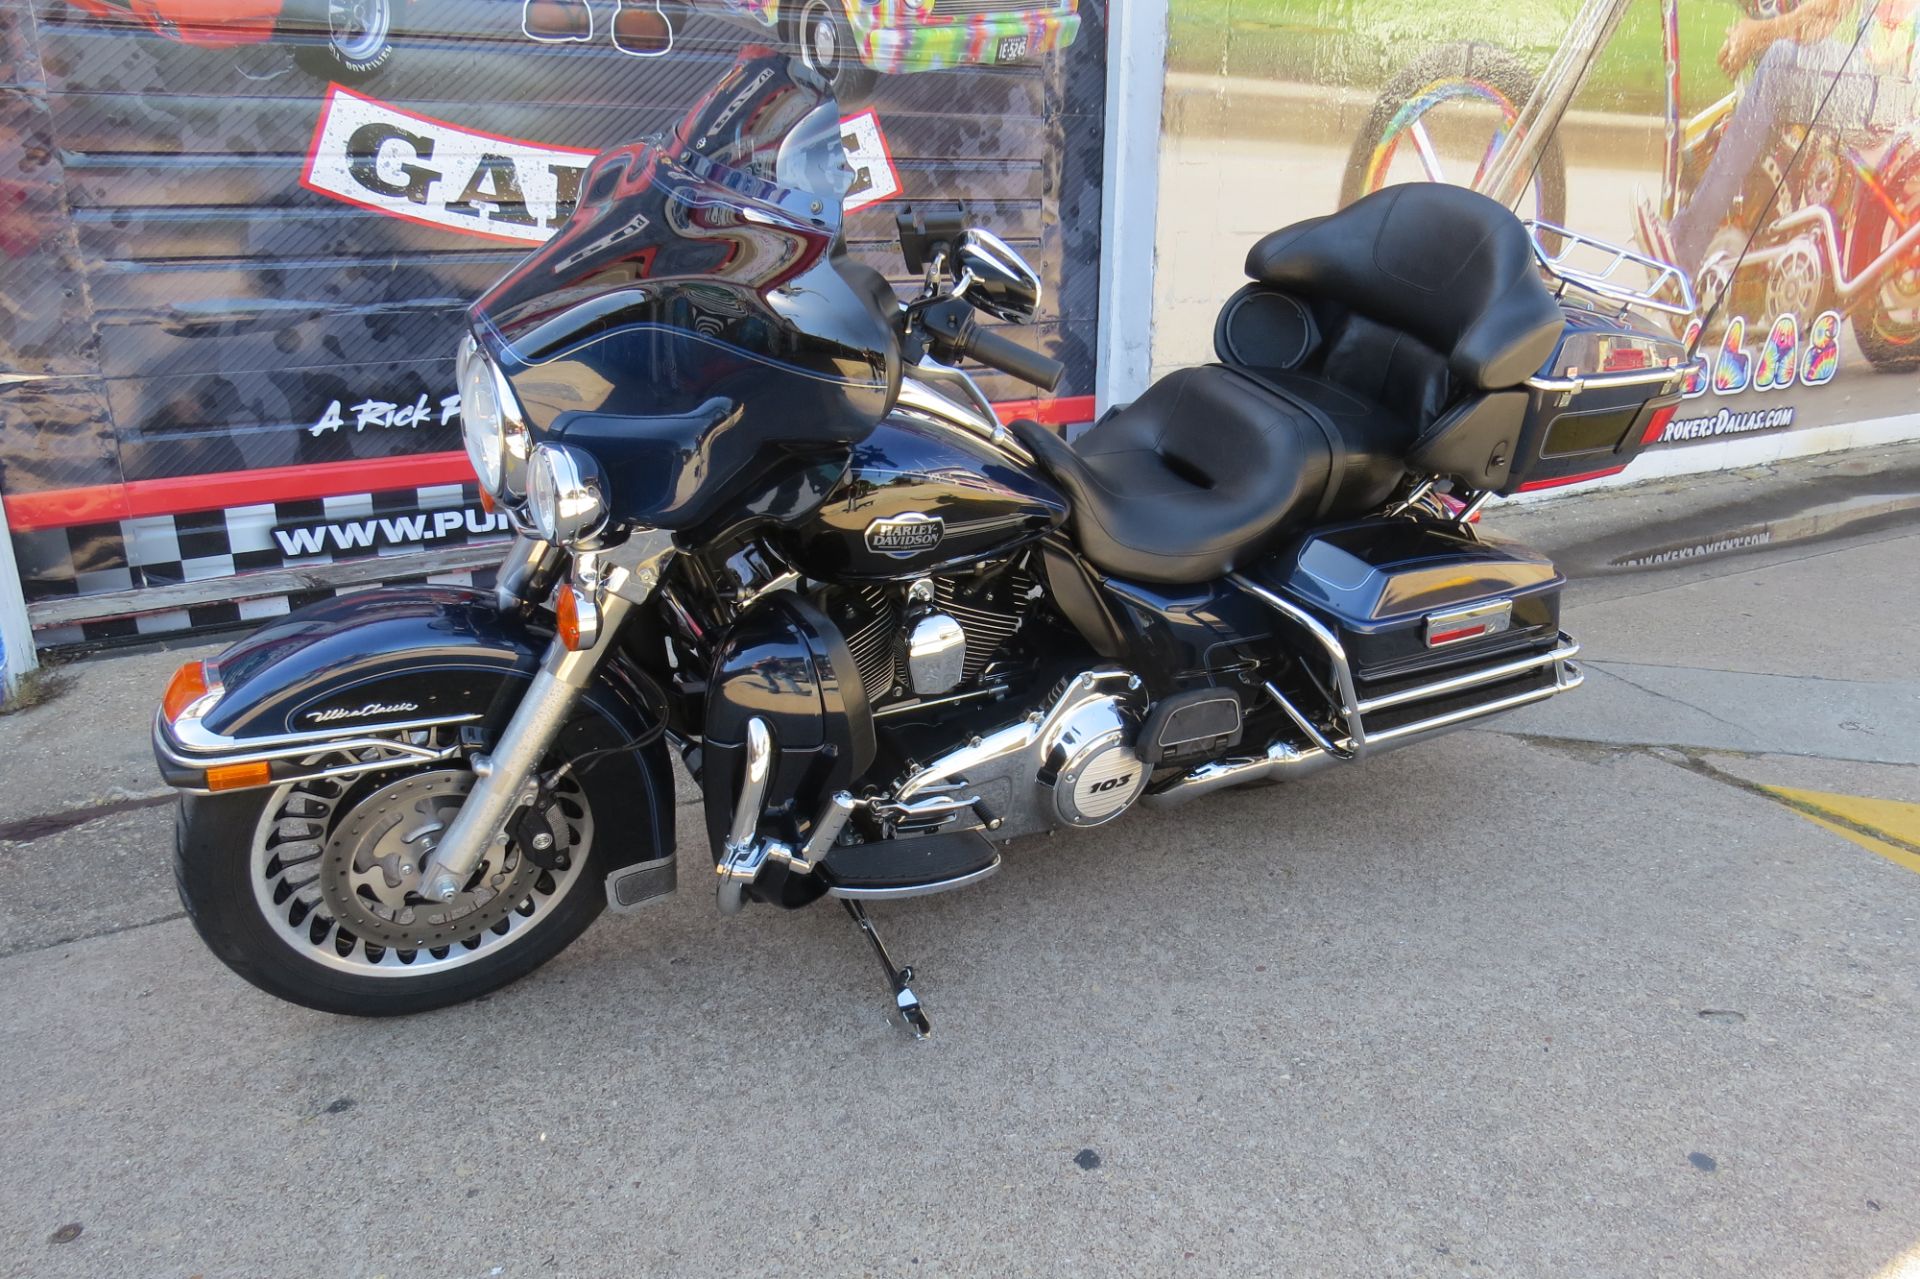 2013 Harley-Davidson Ultra Classic® Electra Glide® in Dallas, Texas - Photo 10